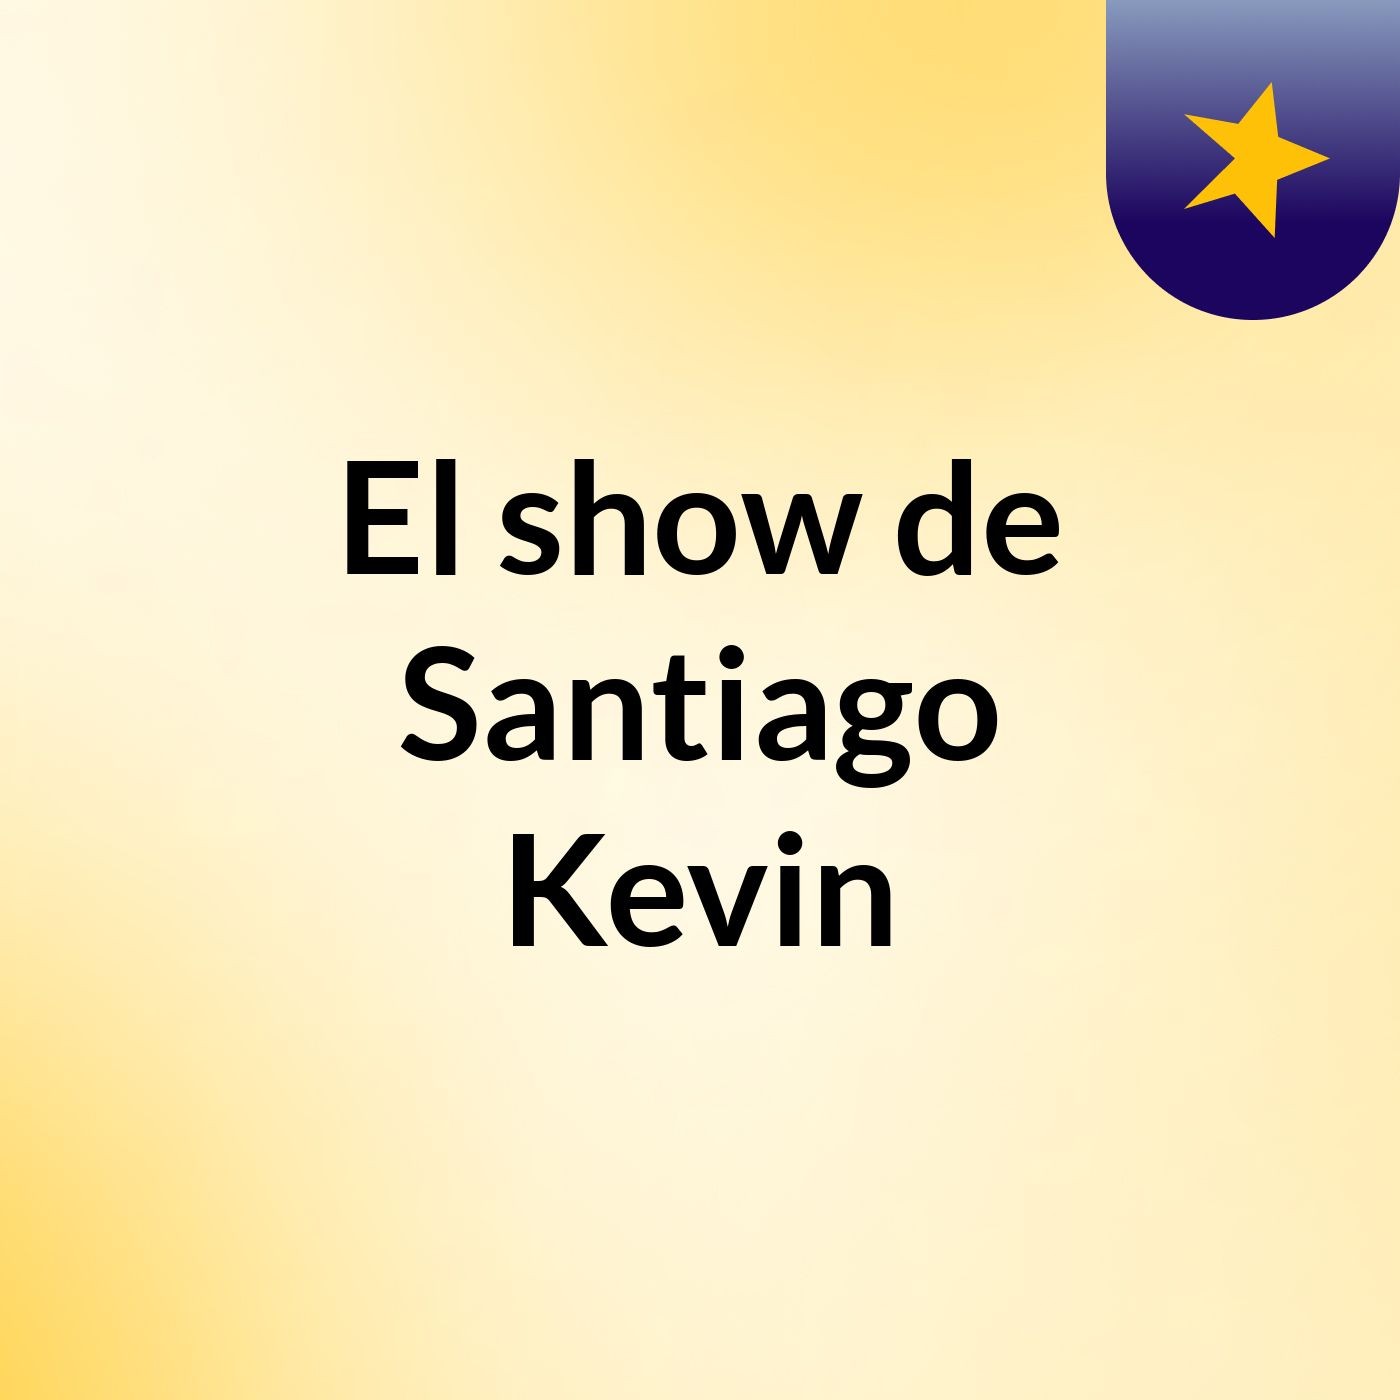 El show de Santiago Kevin